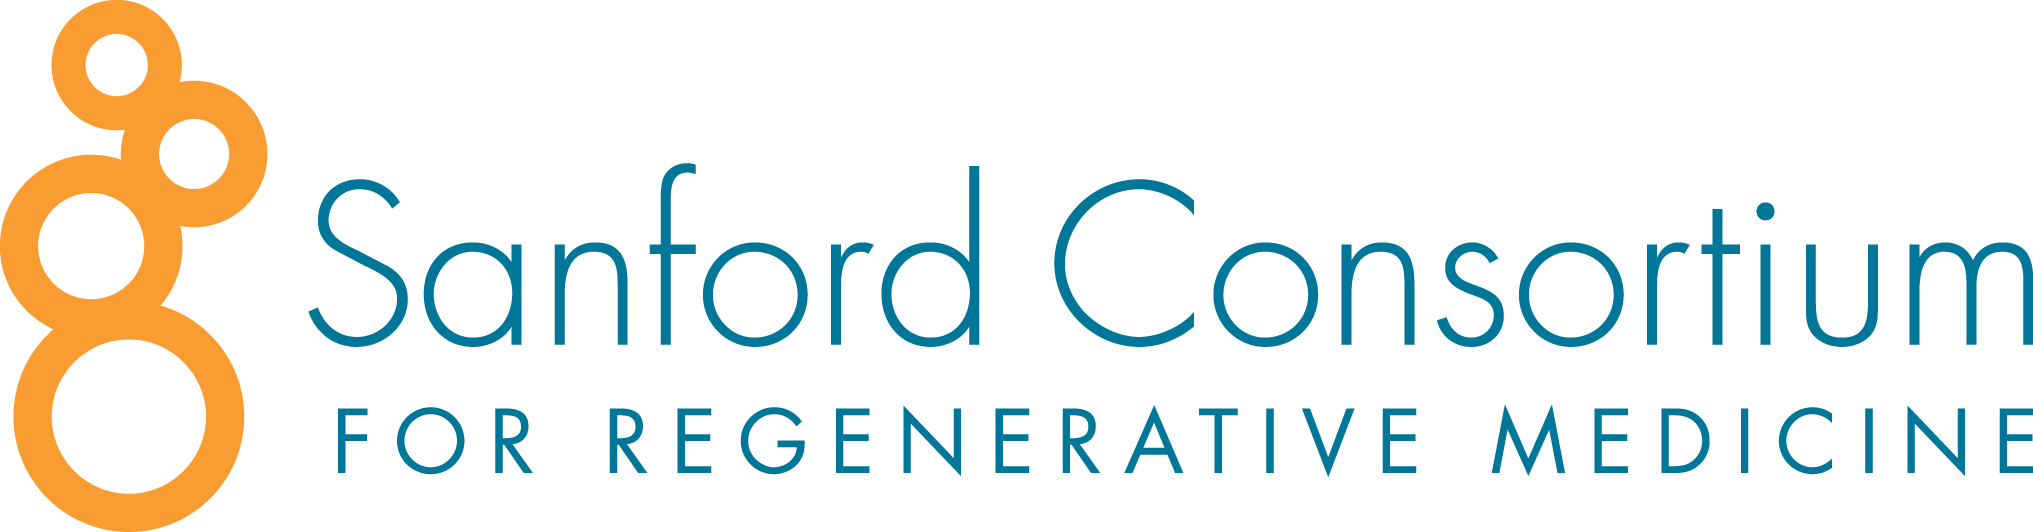 sanford-consortium-logo.png